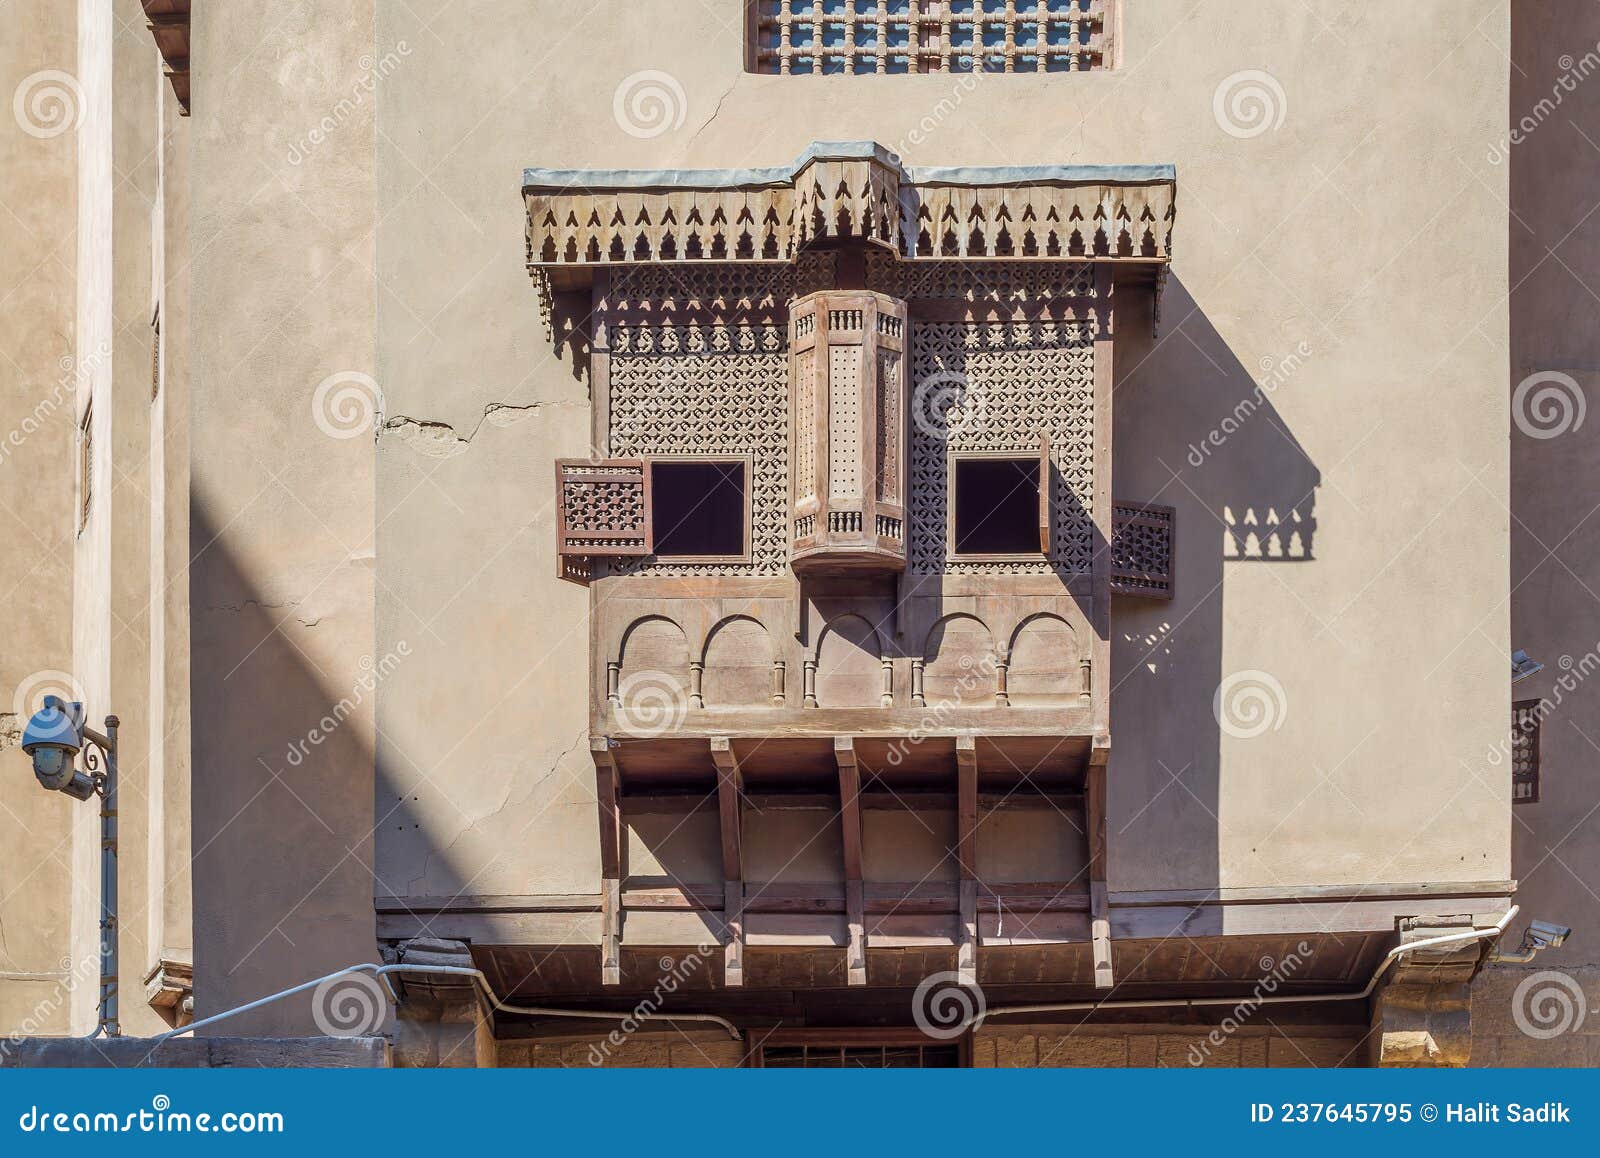 mamluk era style oriel windows with interleaved wooden grid - mashrabiya, on shabby wall